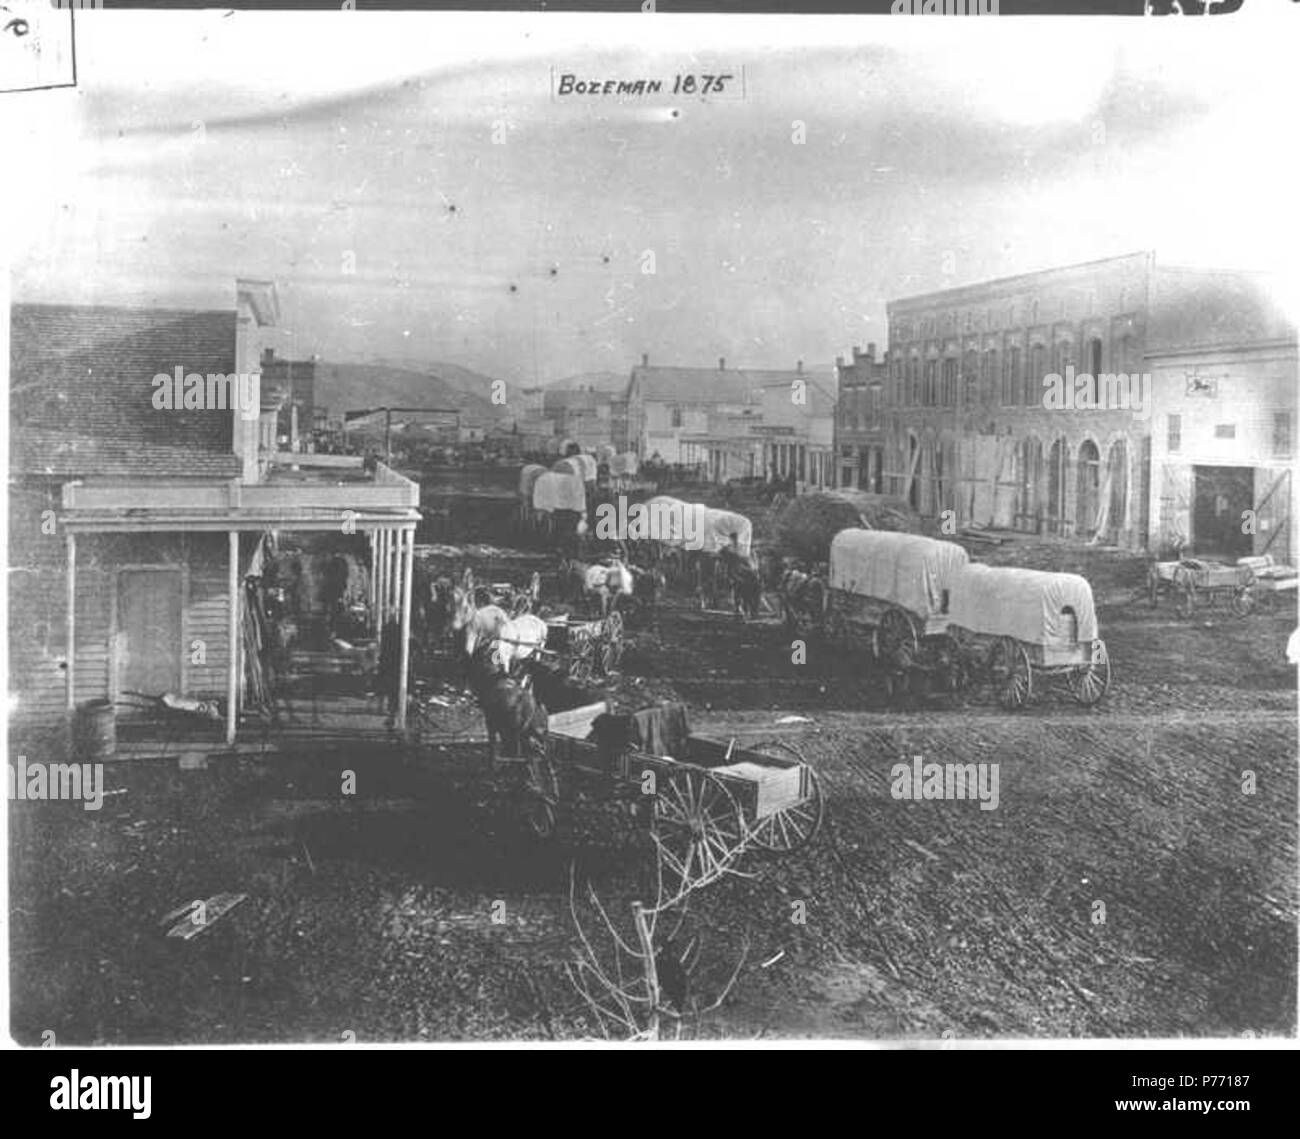 English: Titled: 'Bozeman Main Street, 1875' but the caption is incorrect. 1873 1 BozemanMainStreet1875 Stock Photo